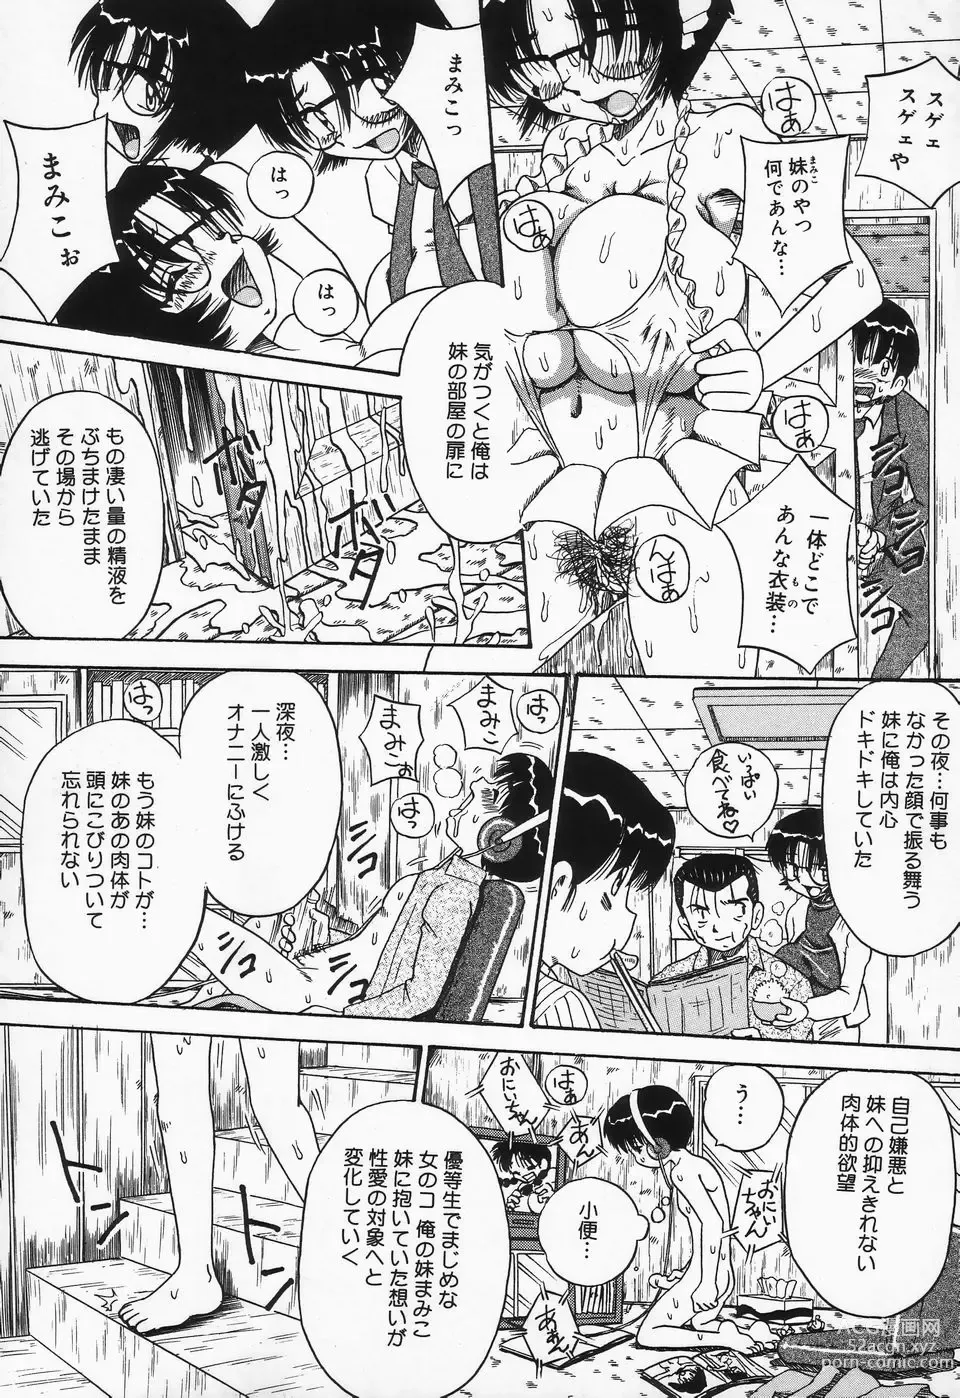 Page 155 of manga Seieki Mamire Bakunyuu Naburi